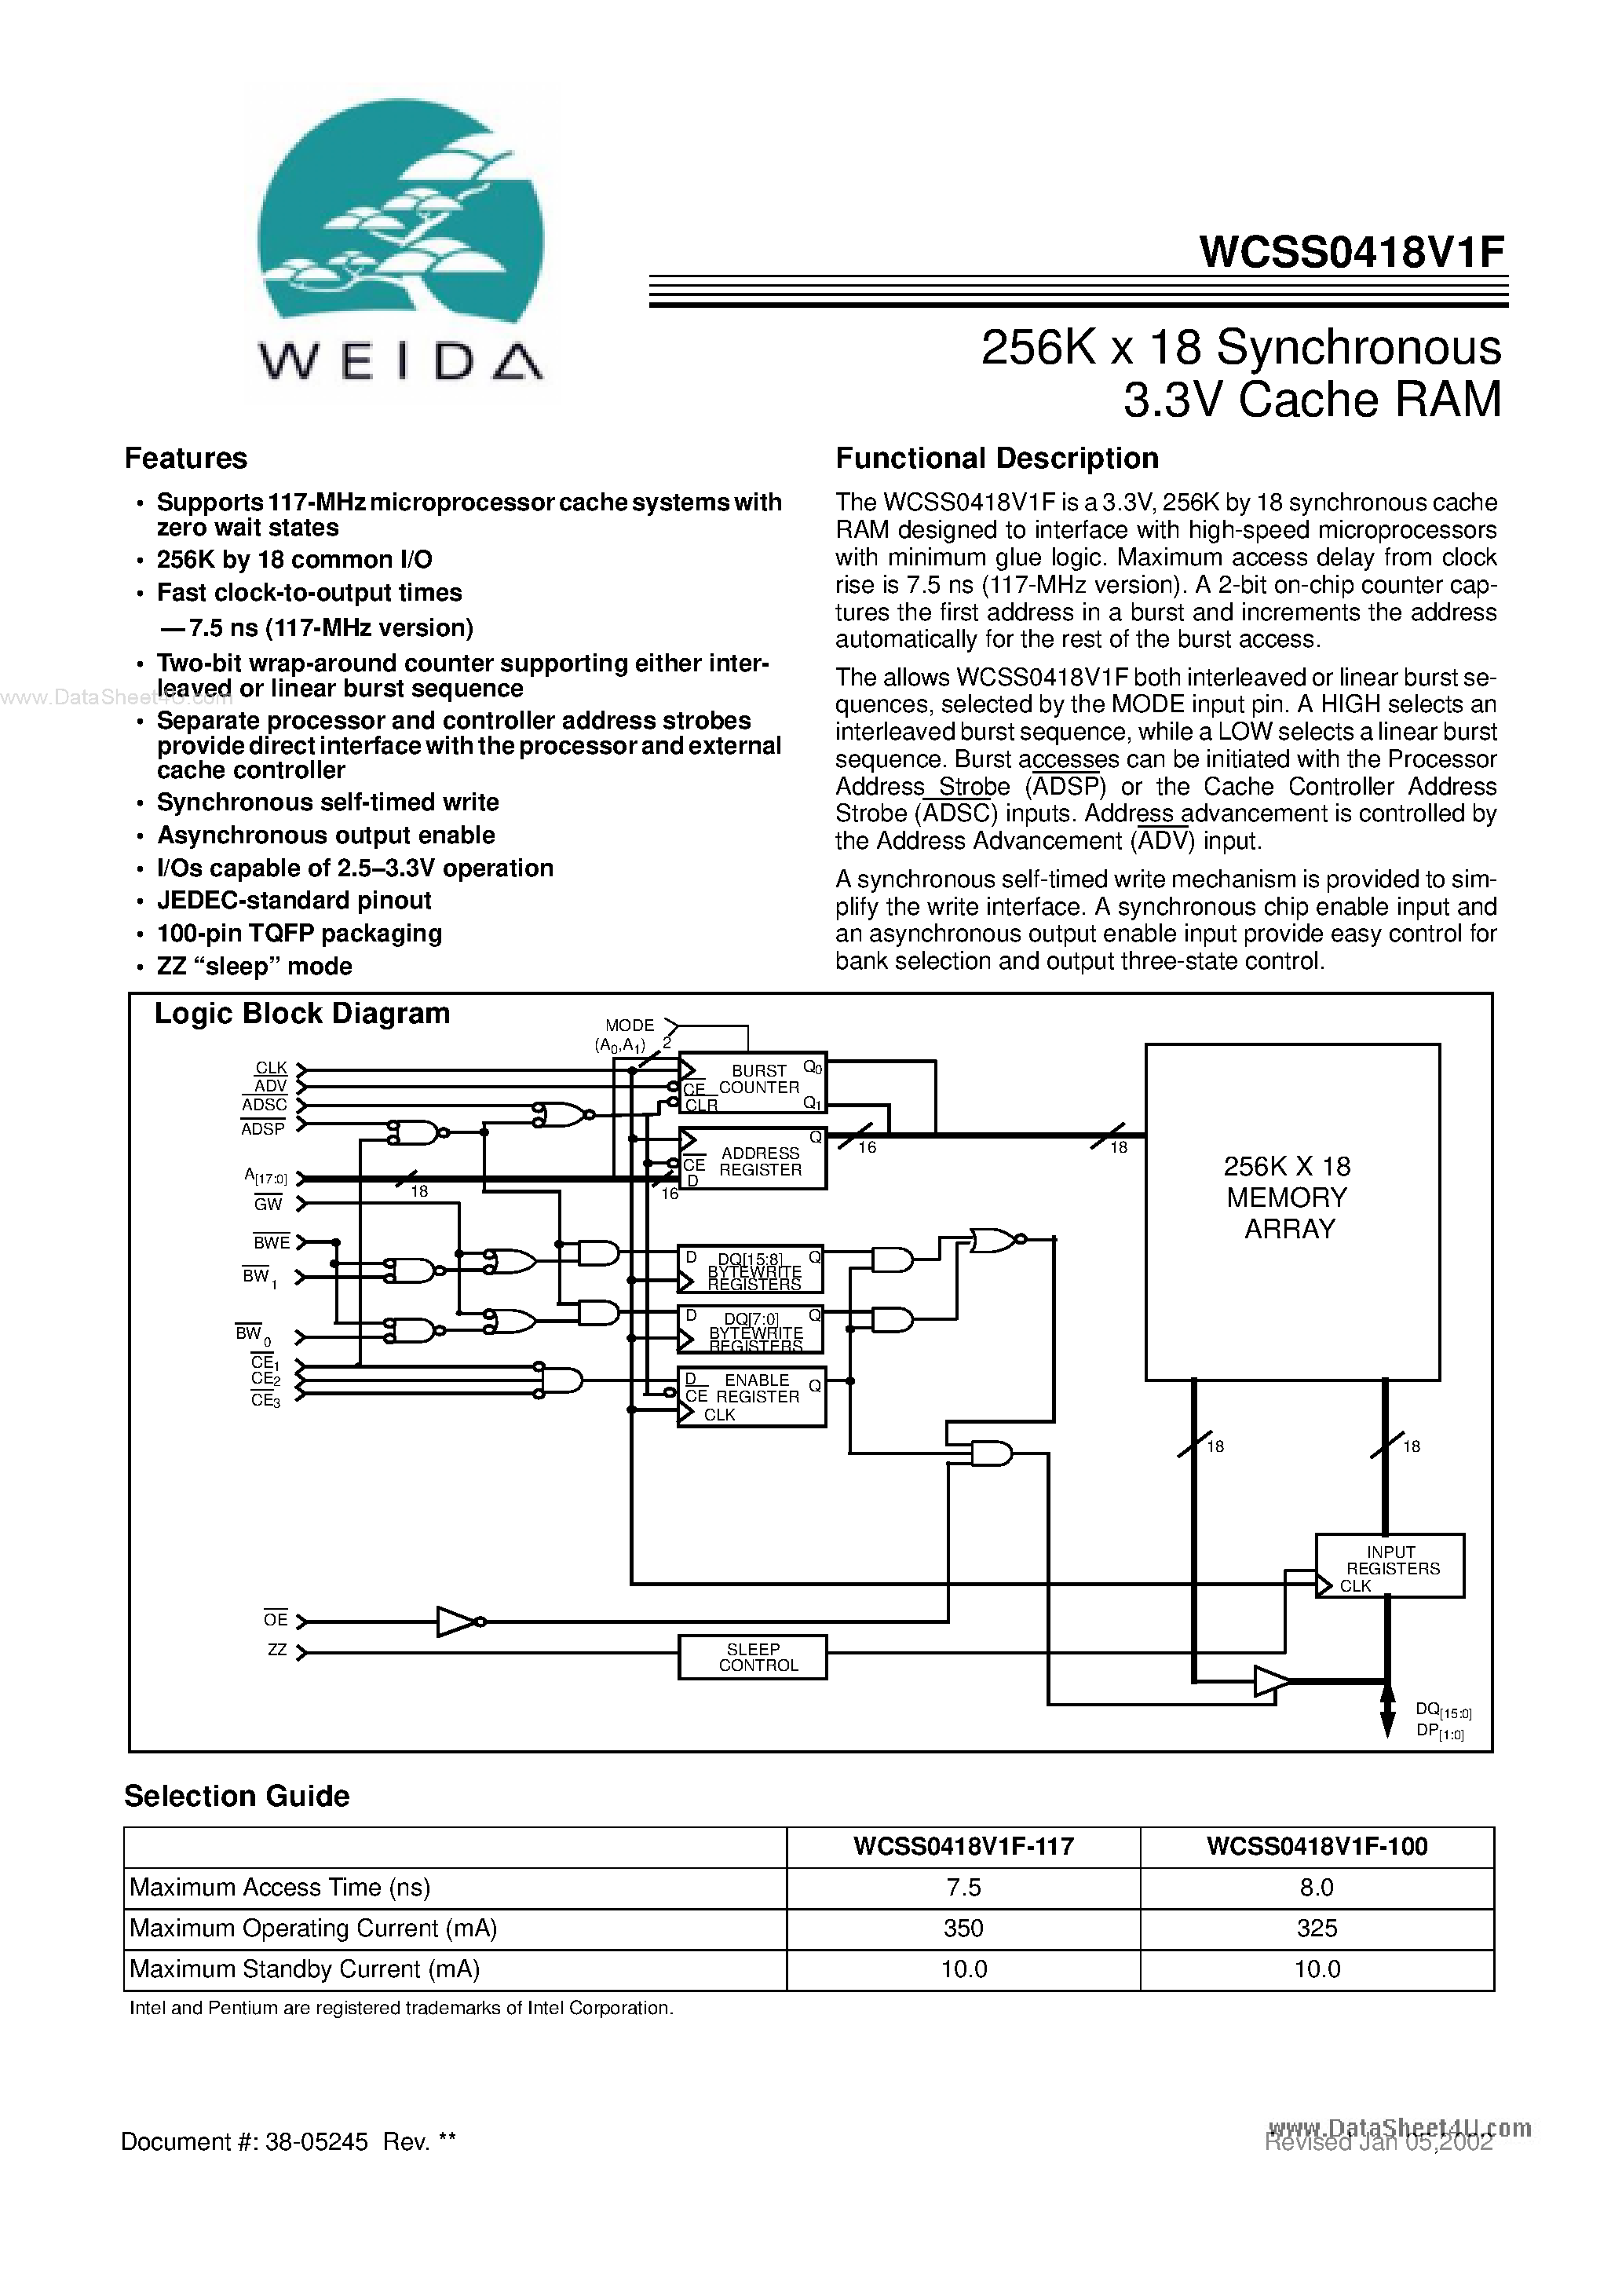 Datasheet WCSS0418V1F - 256K x 18 Synchronous 3.3V Cache RAM page 1